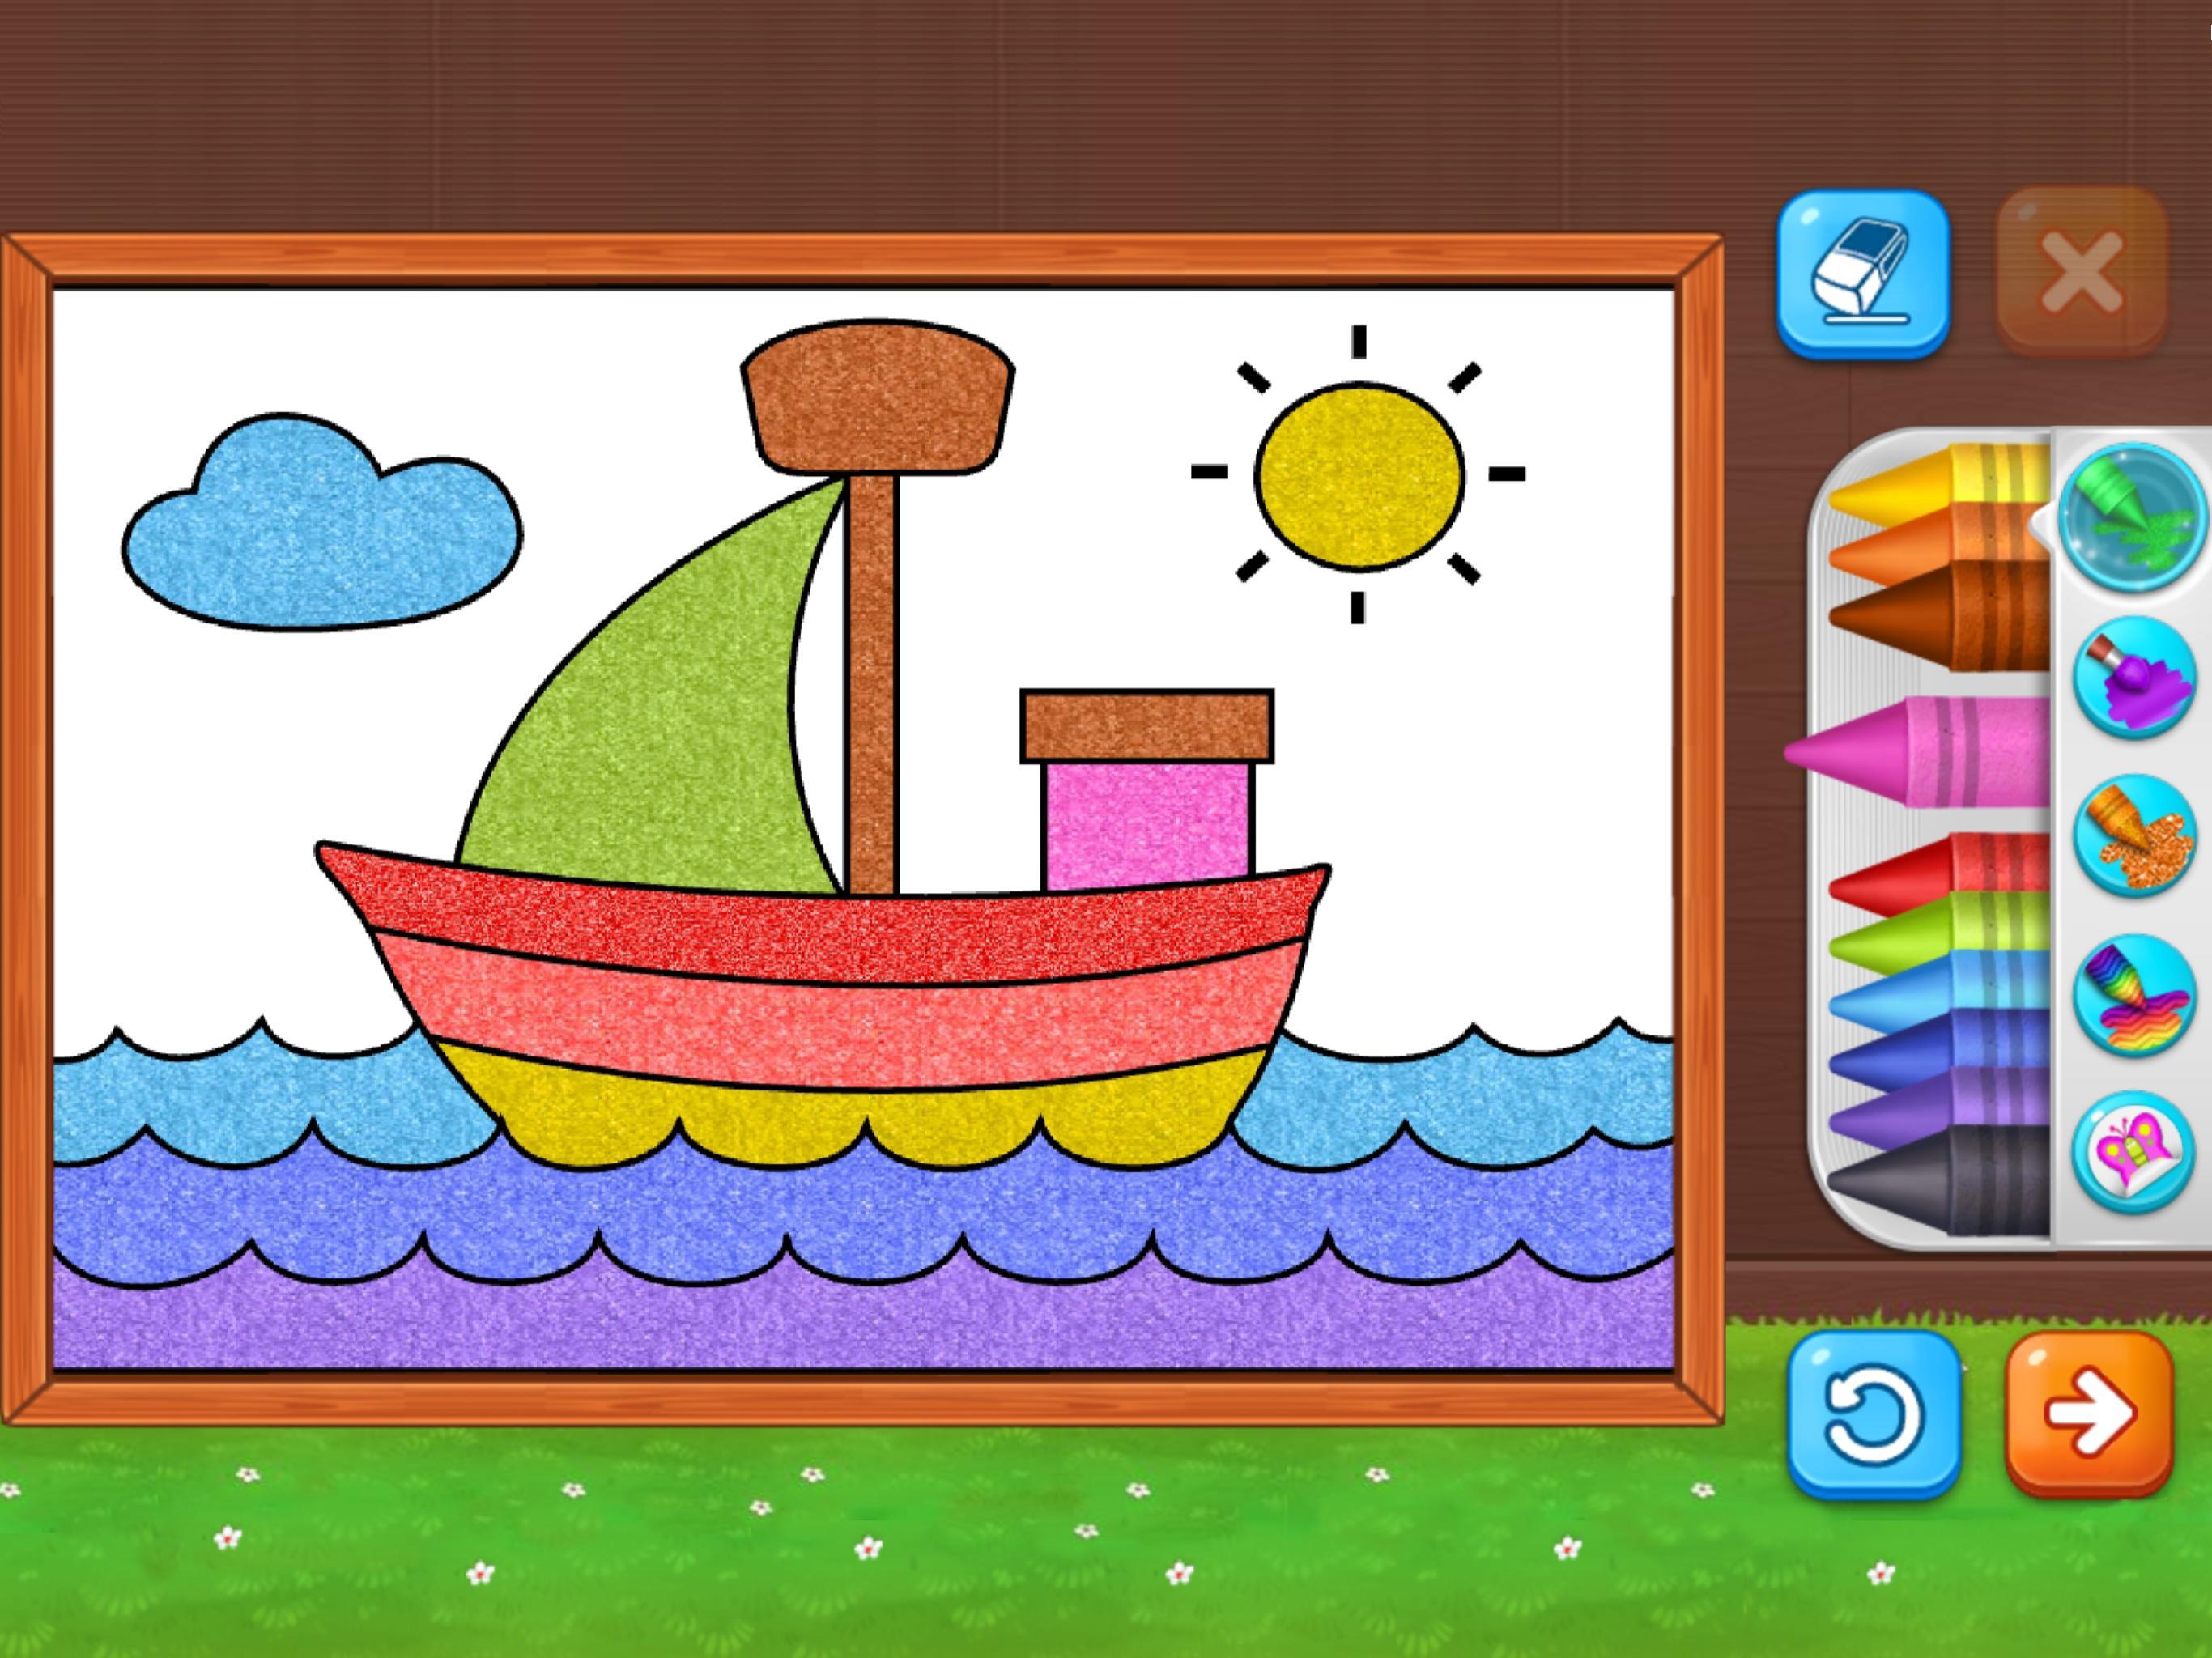 Coloring Games Coloring Book, Painting, Glow Draw 1.0.7 Screenshot 14